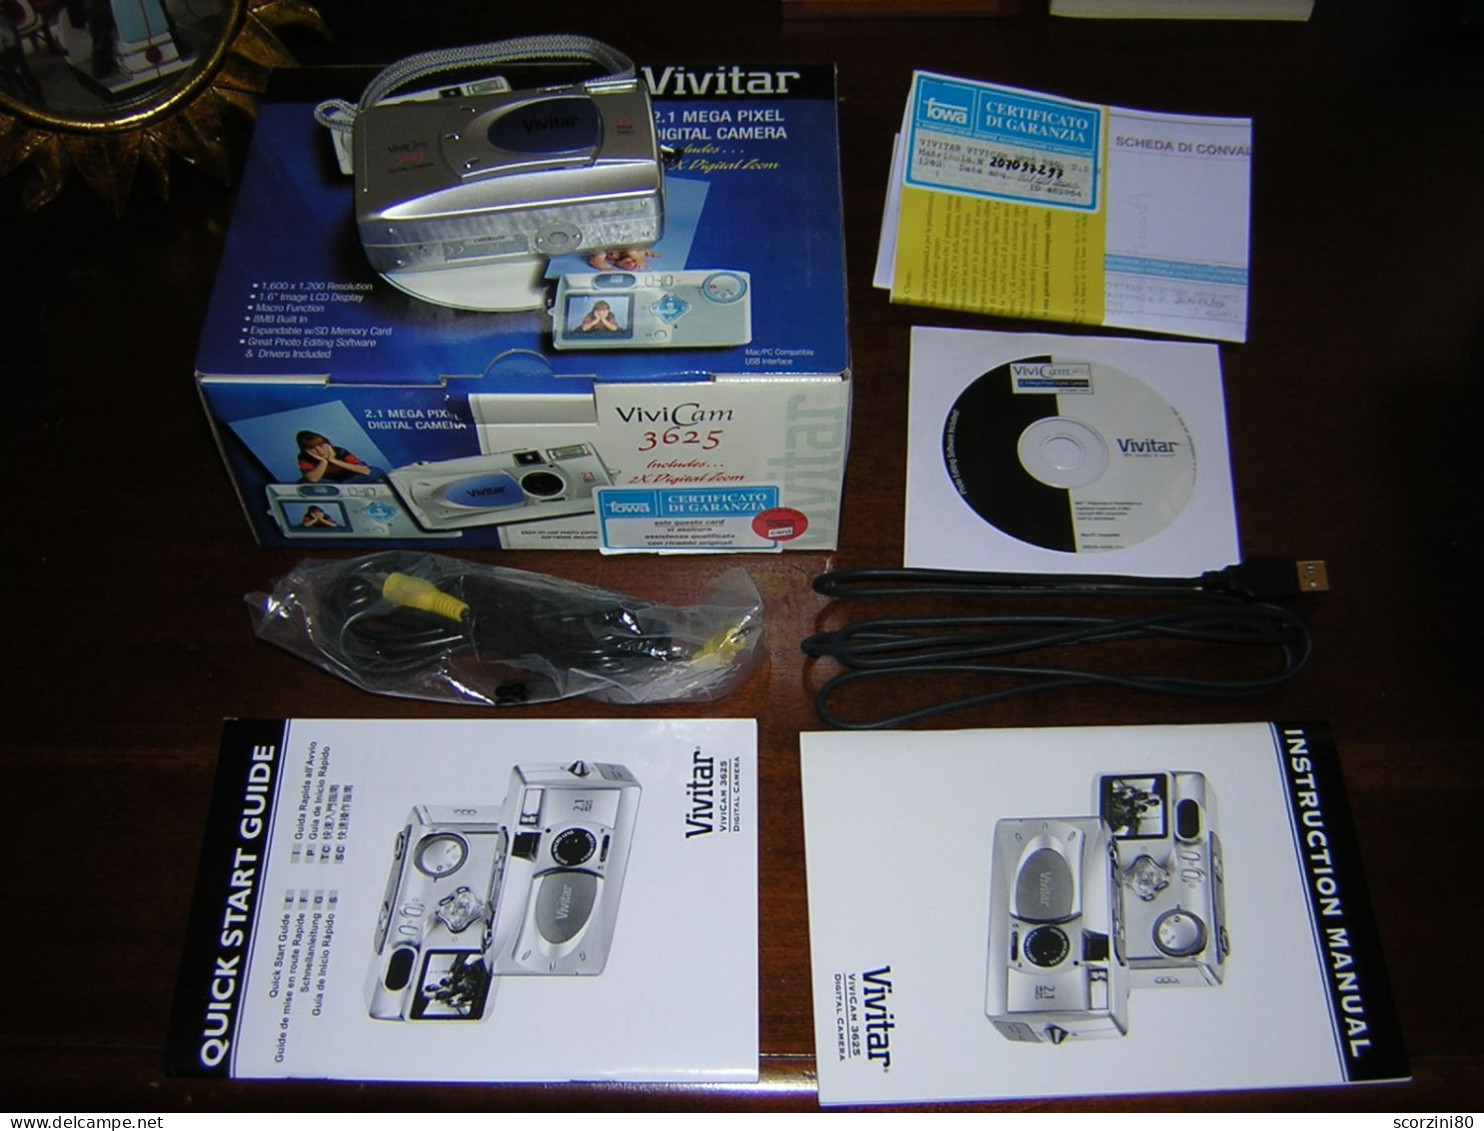 Vivitar 2.1 Megapixel Digital Camera FUNZIONANTE - Other Apparatus